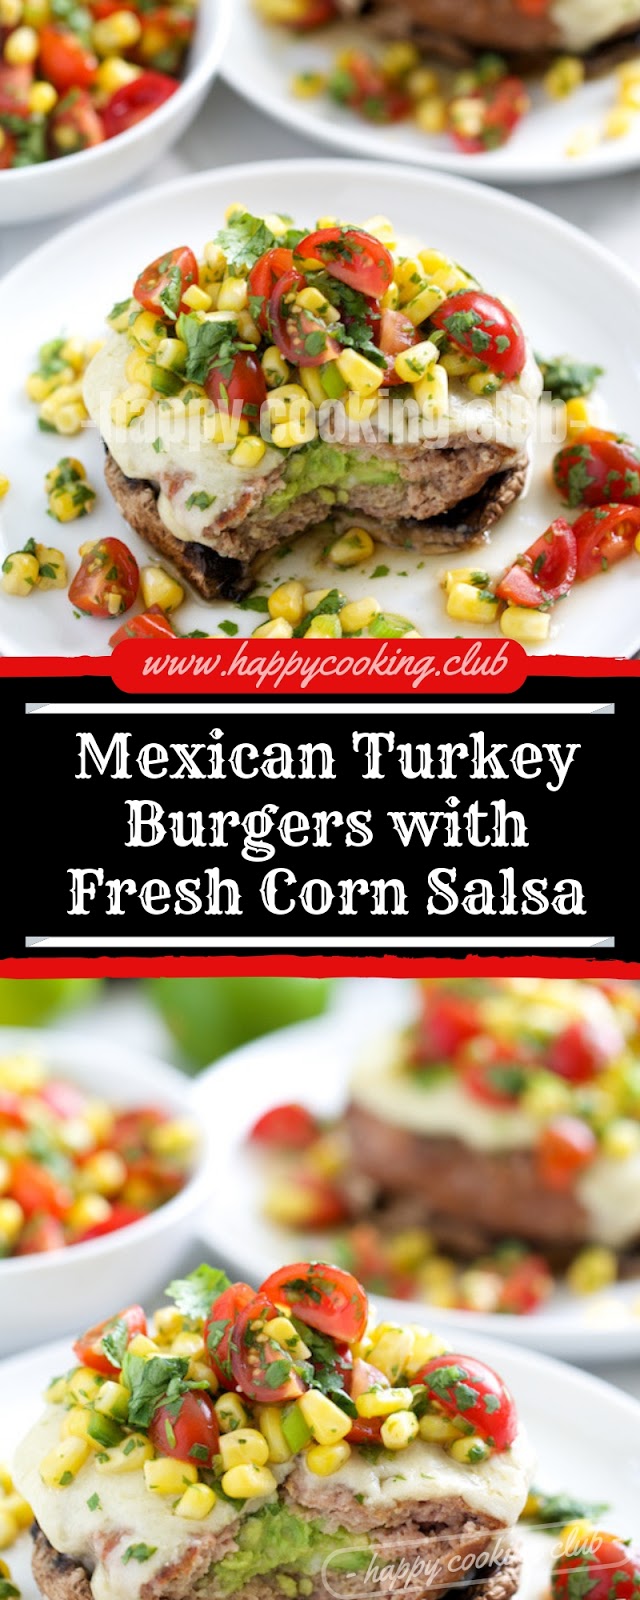 Mexican Turkey Burgers with Fresh Corn Salsa